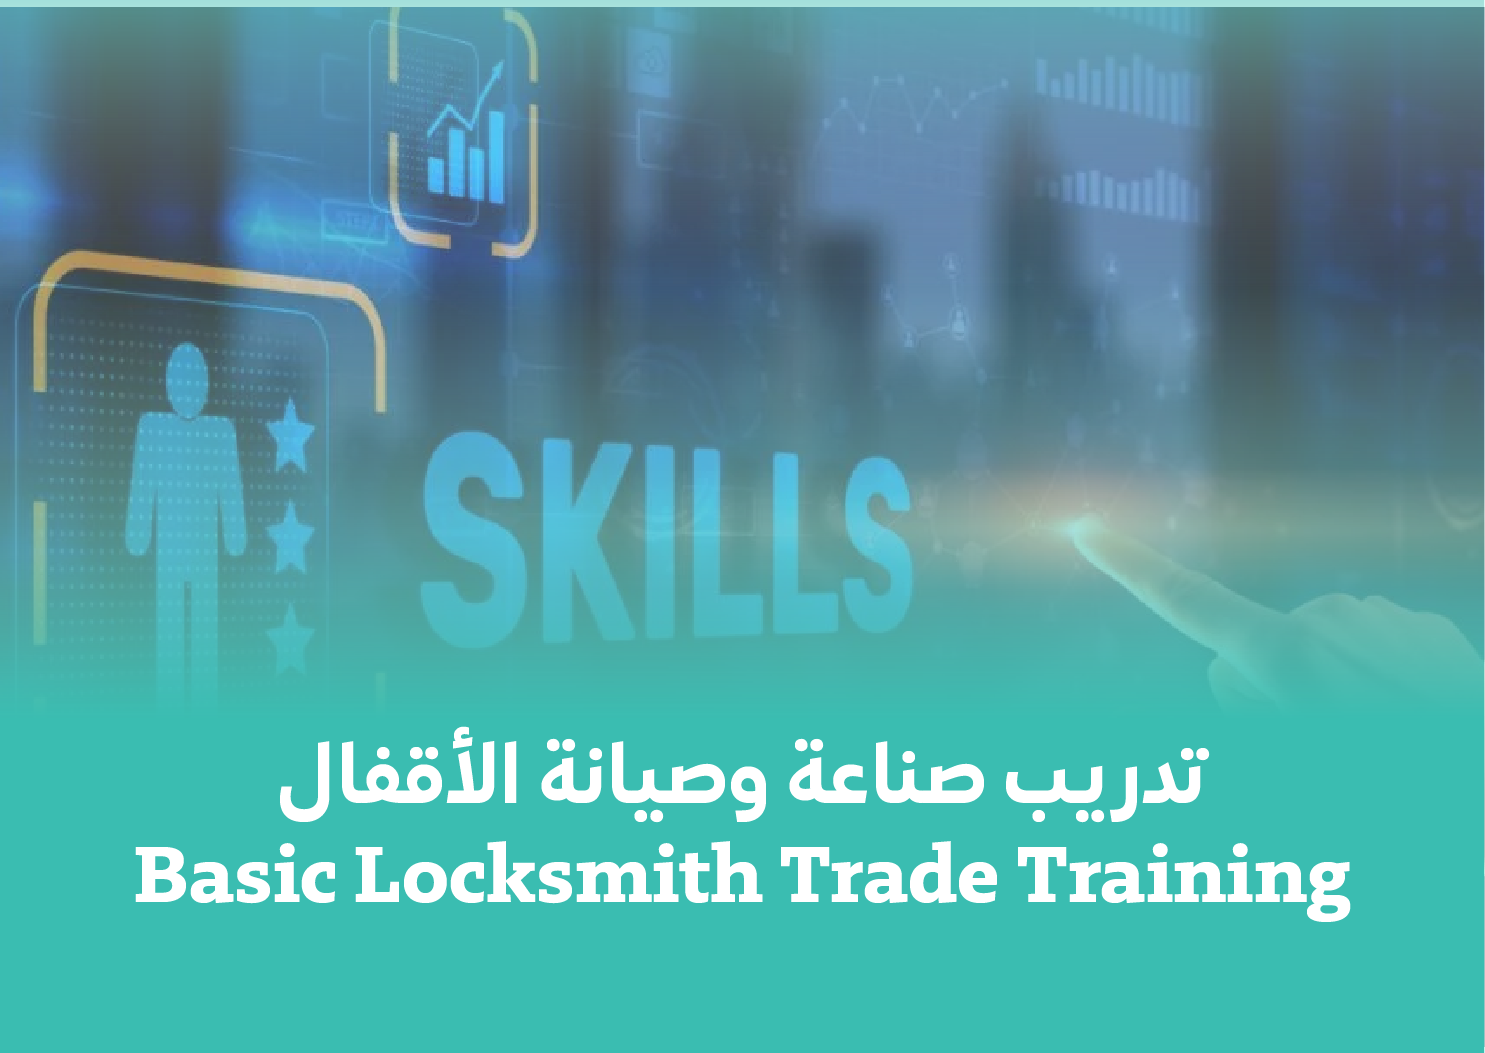 Basic Locksmith Trade Training